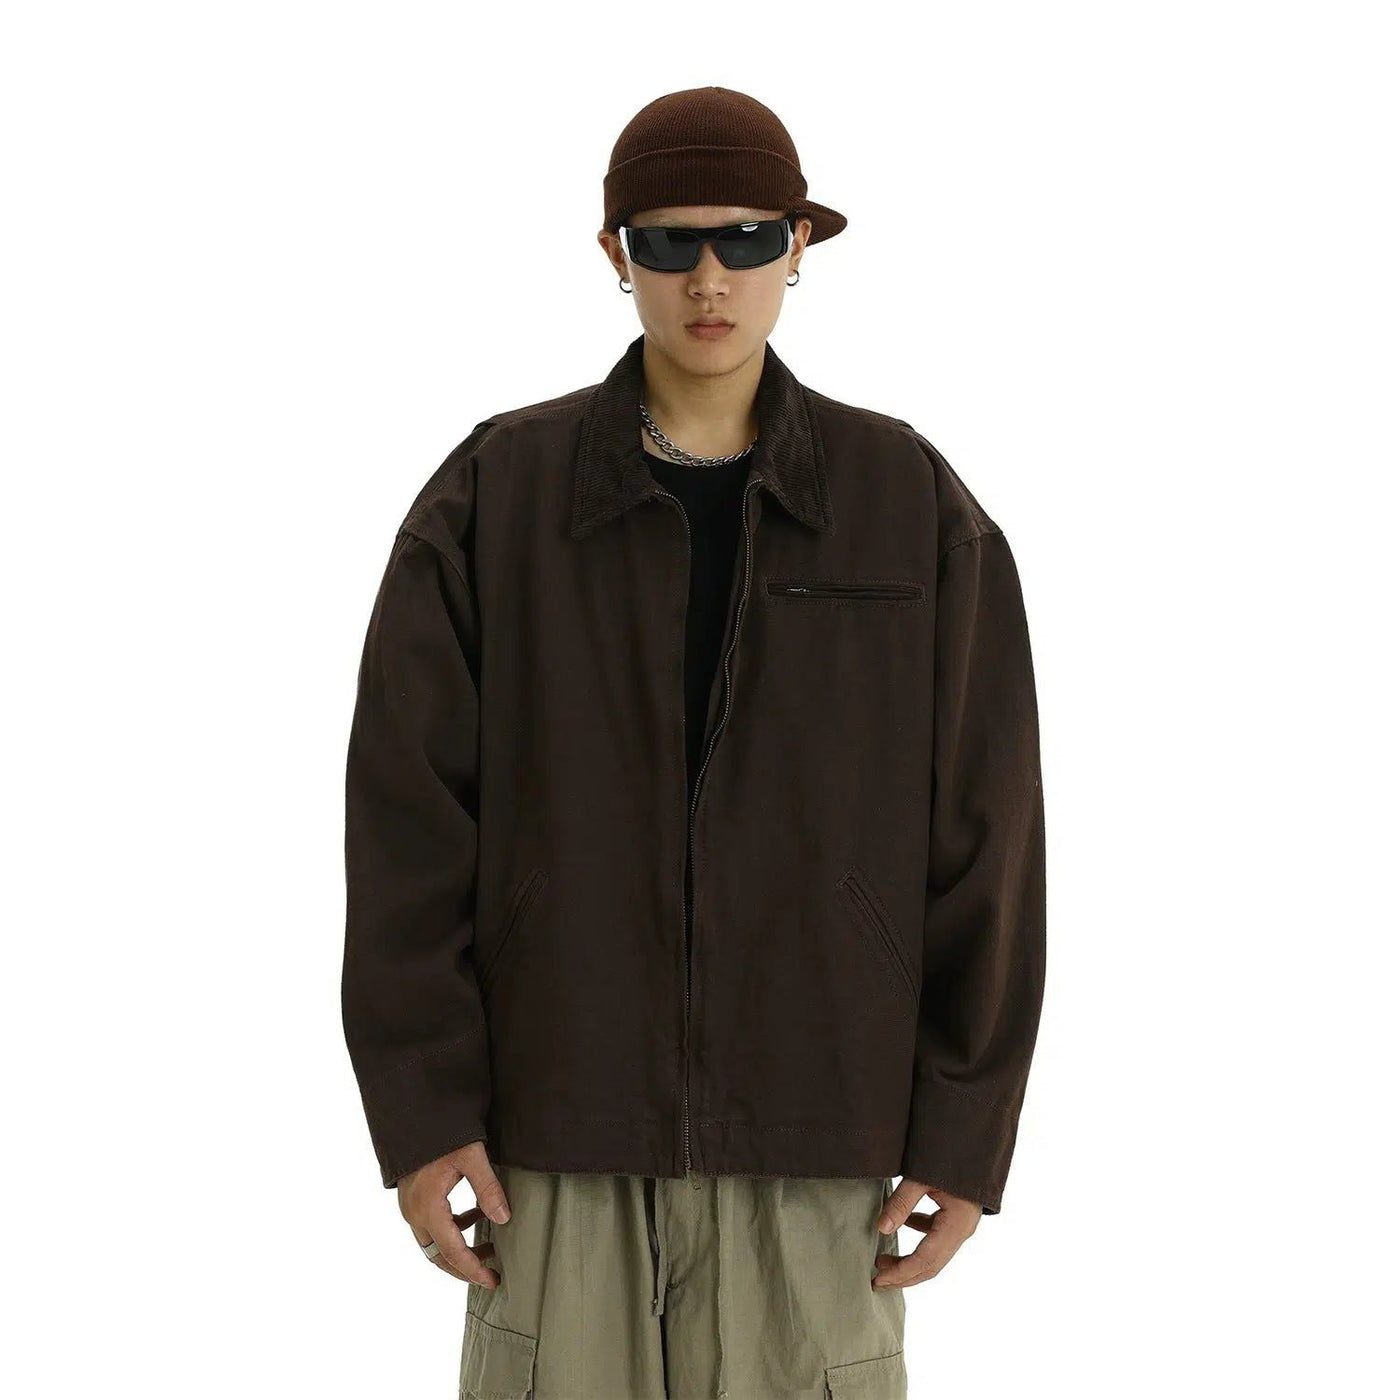 Heavy Corduroy Lapel Jacket Korean Street Fashion Jacket By MEBXX Shop Online at OH Vault